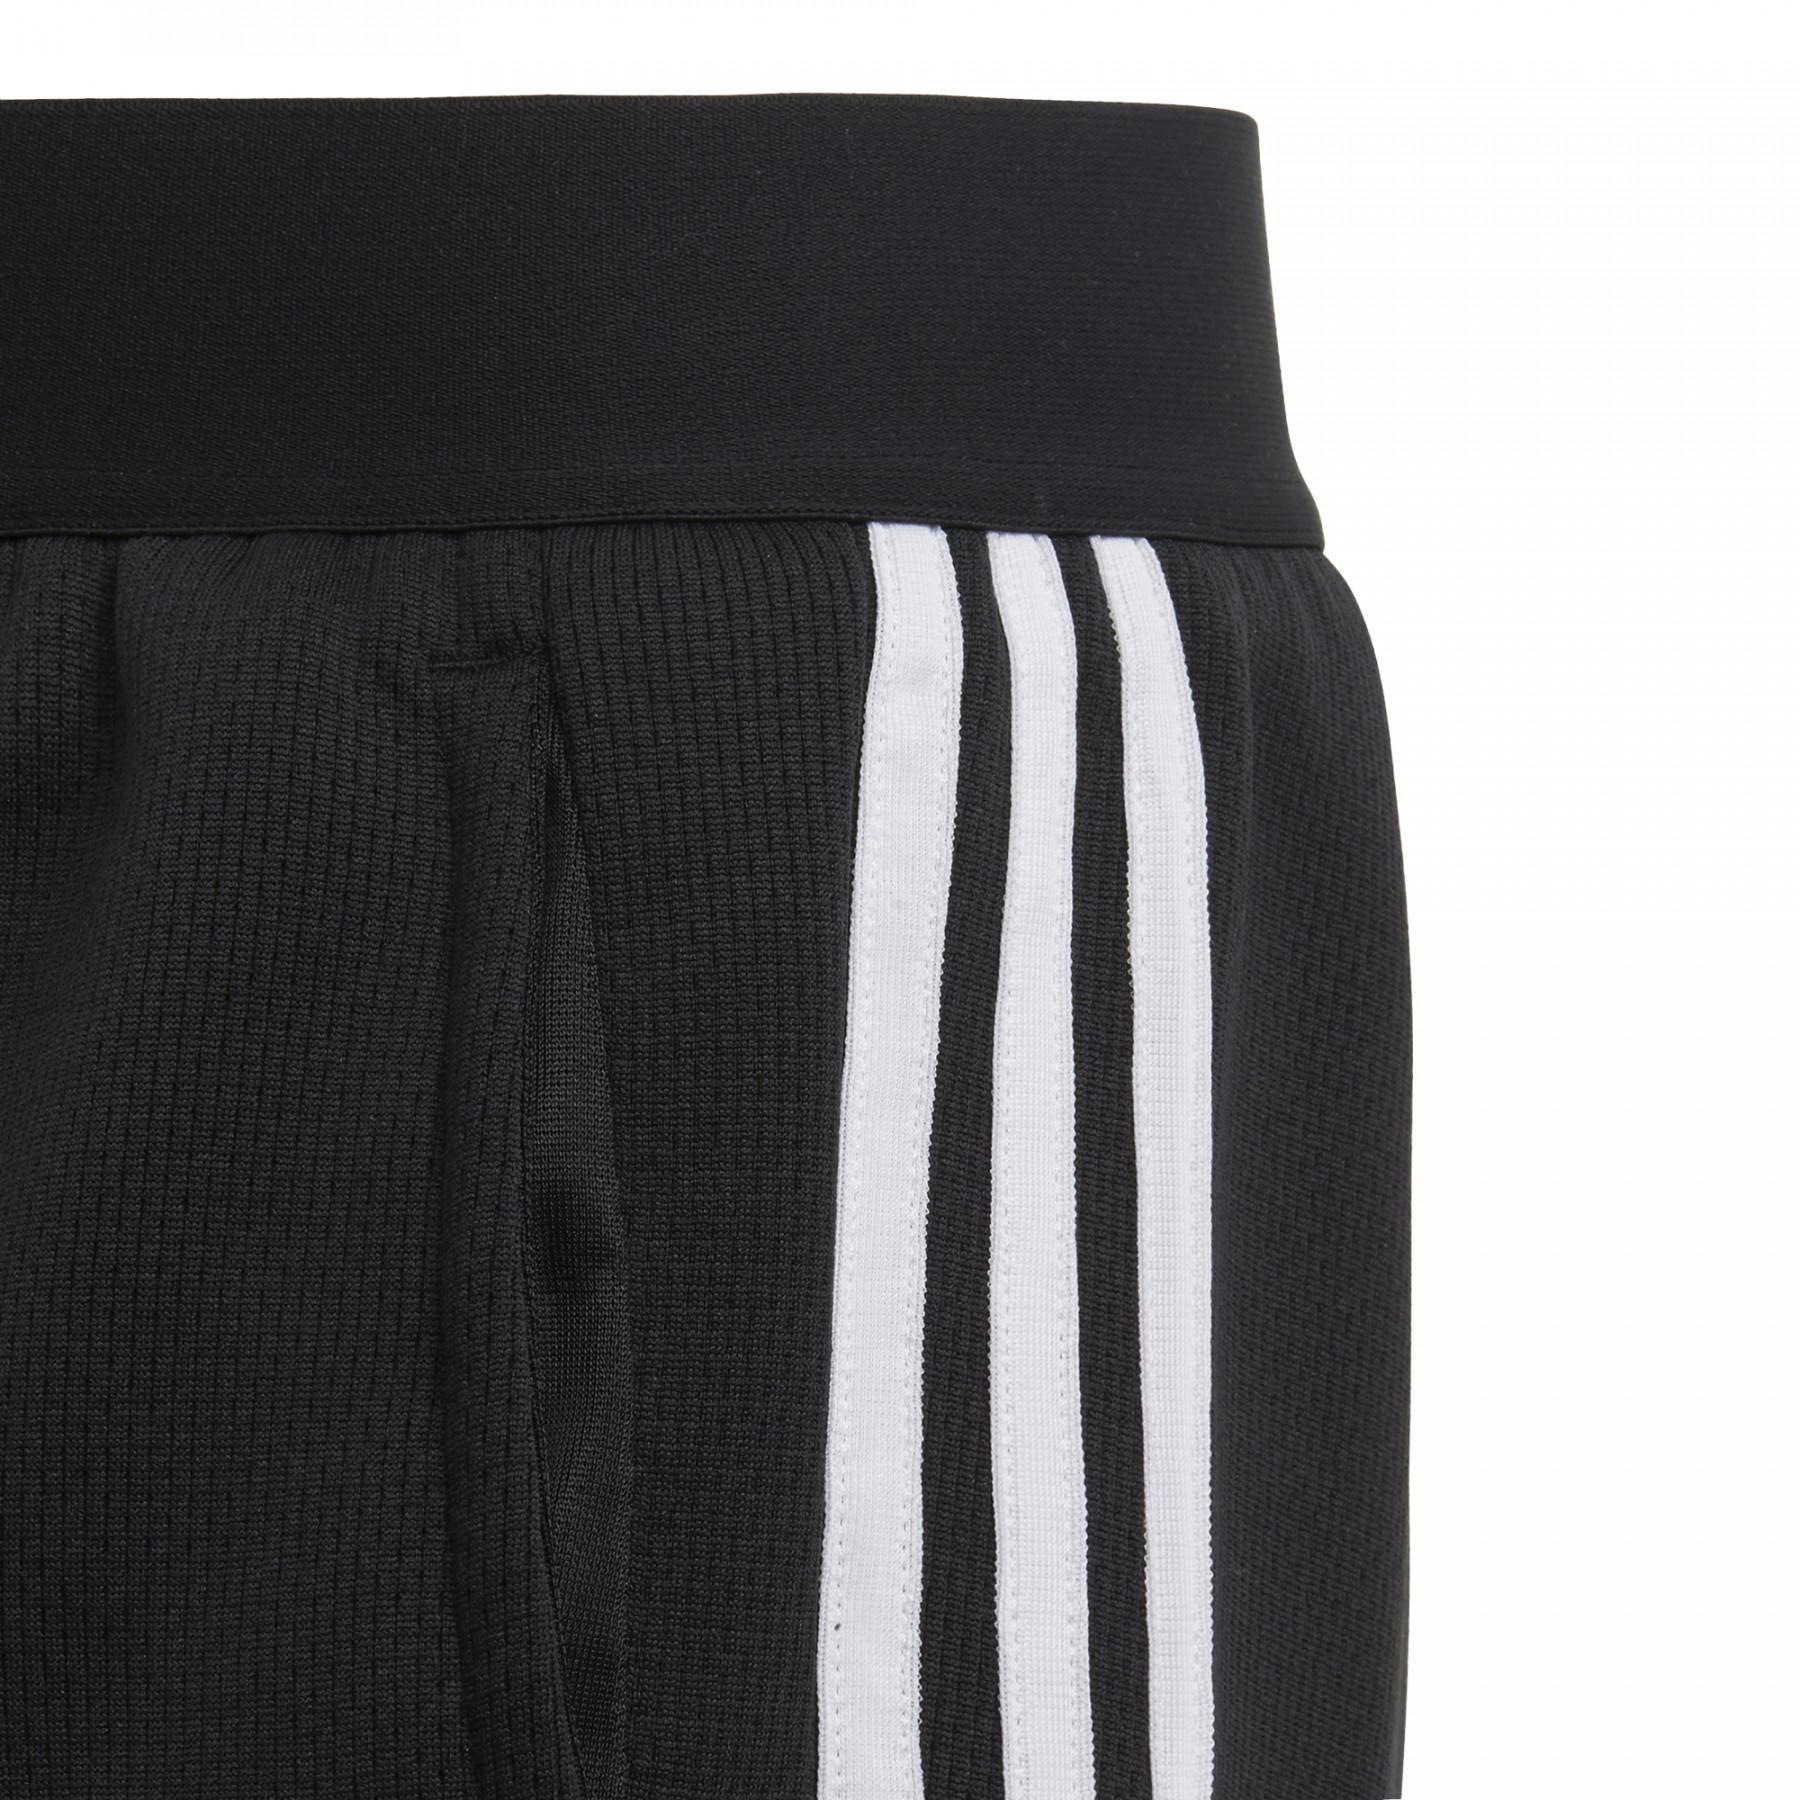 Children's shorts adidas Preadator 3-Stripes